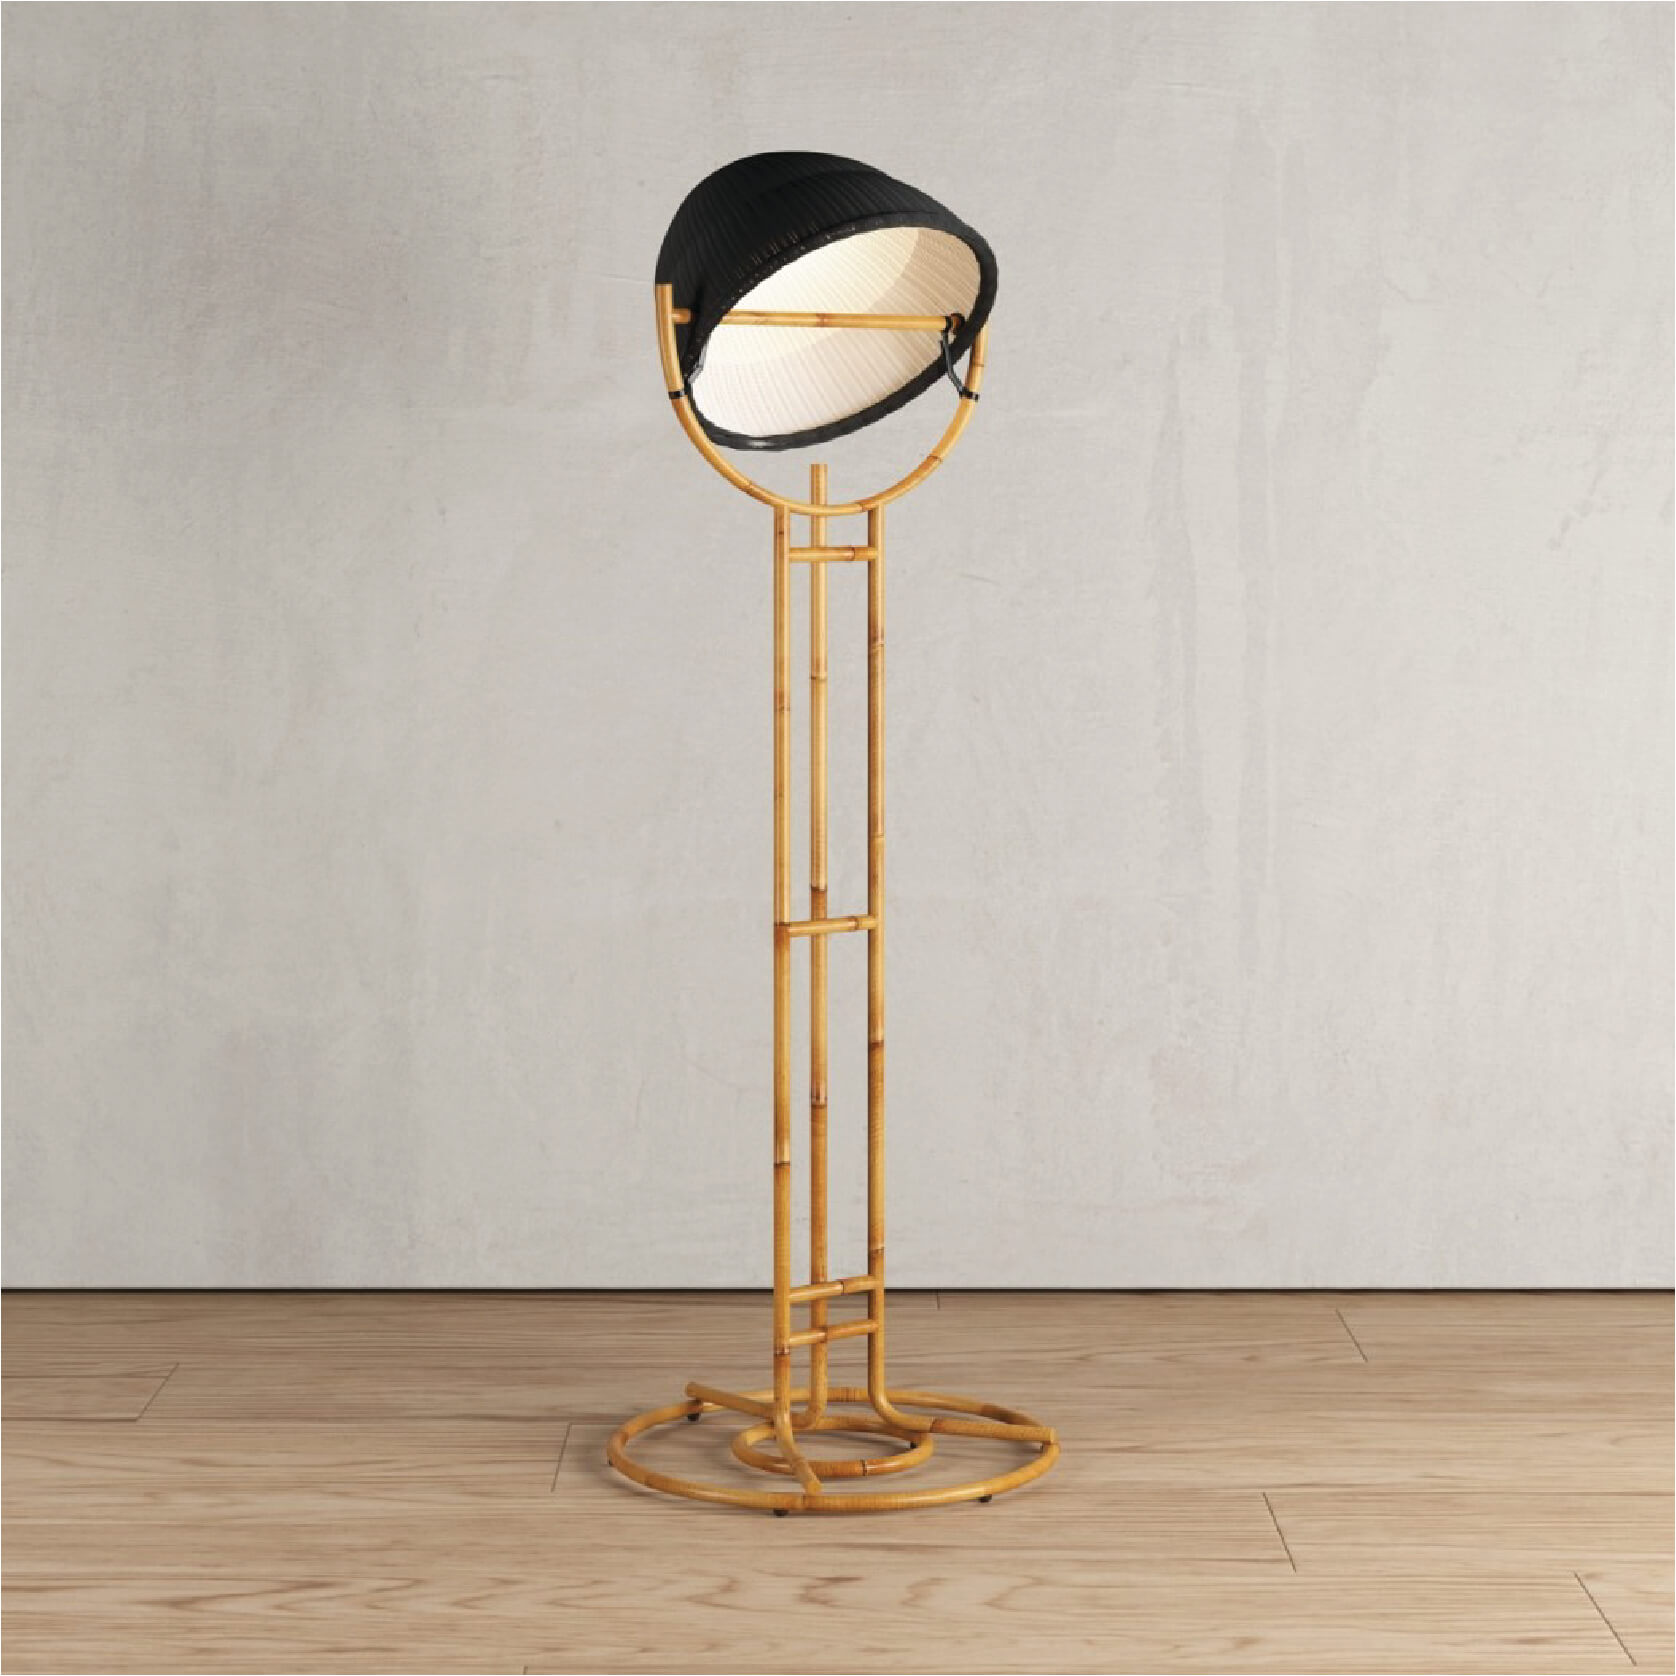 G/T LAMP by E. Murio - Design Commune Feature